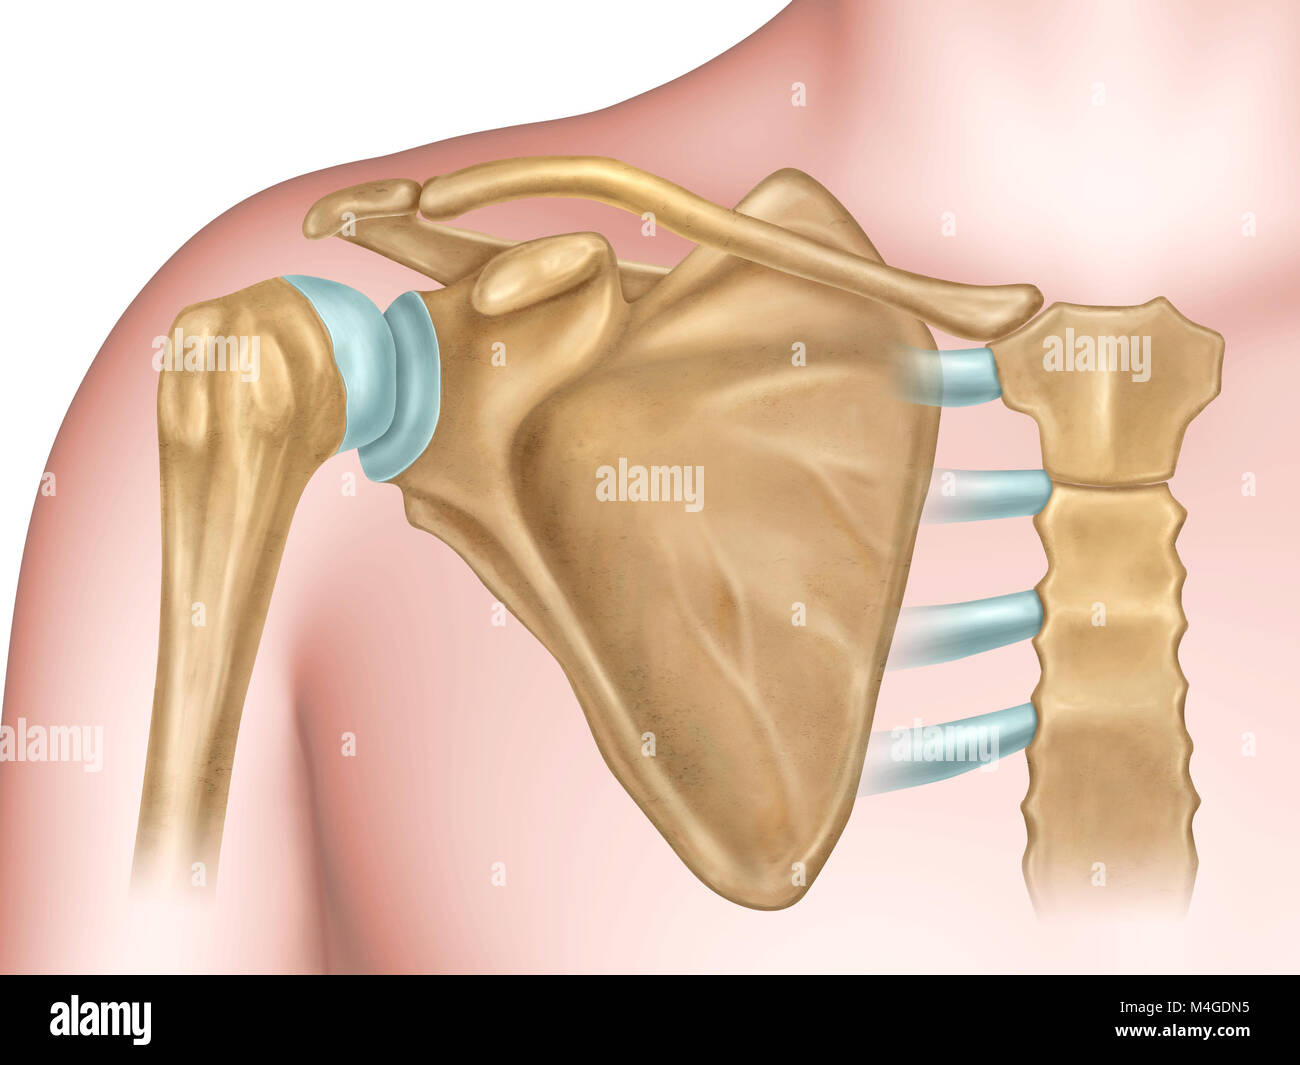 Anterior view of the shoulder anatomy. digital illustration. Stock Photo